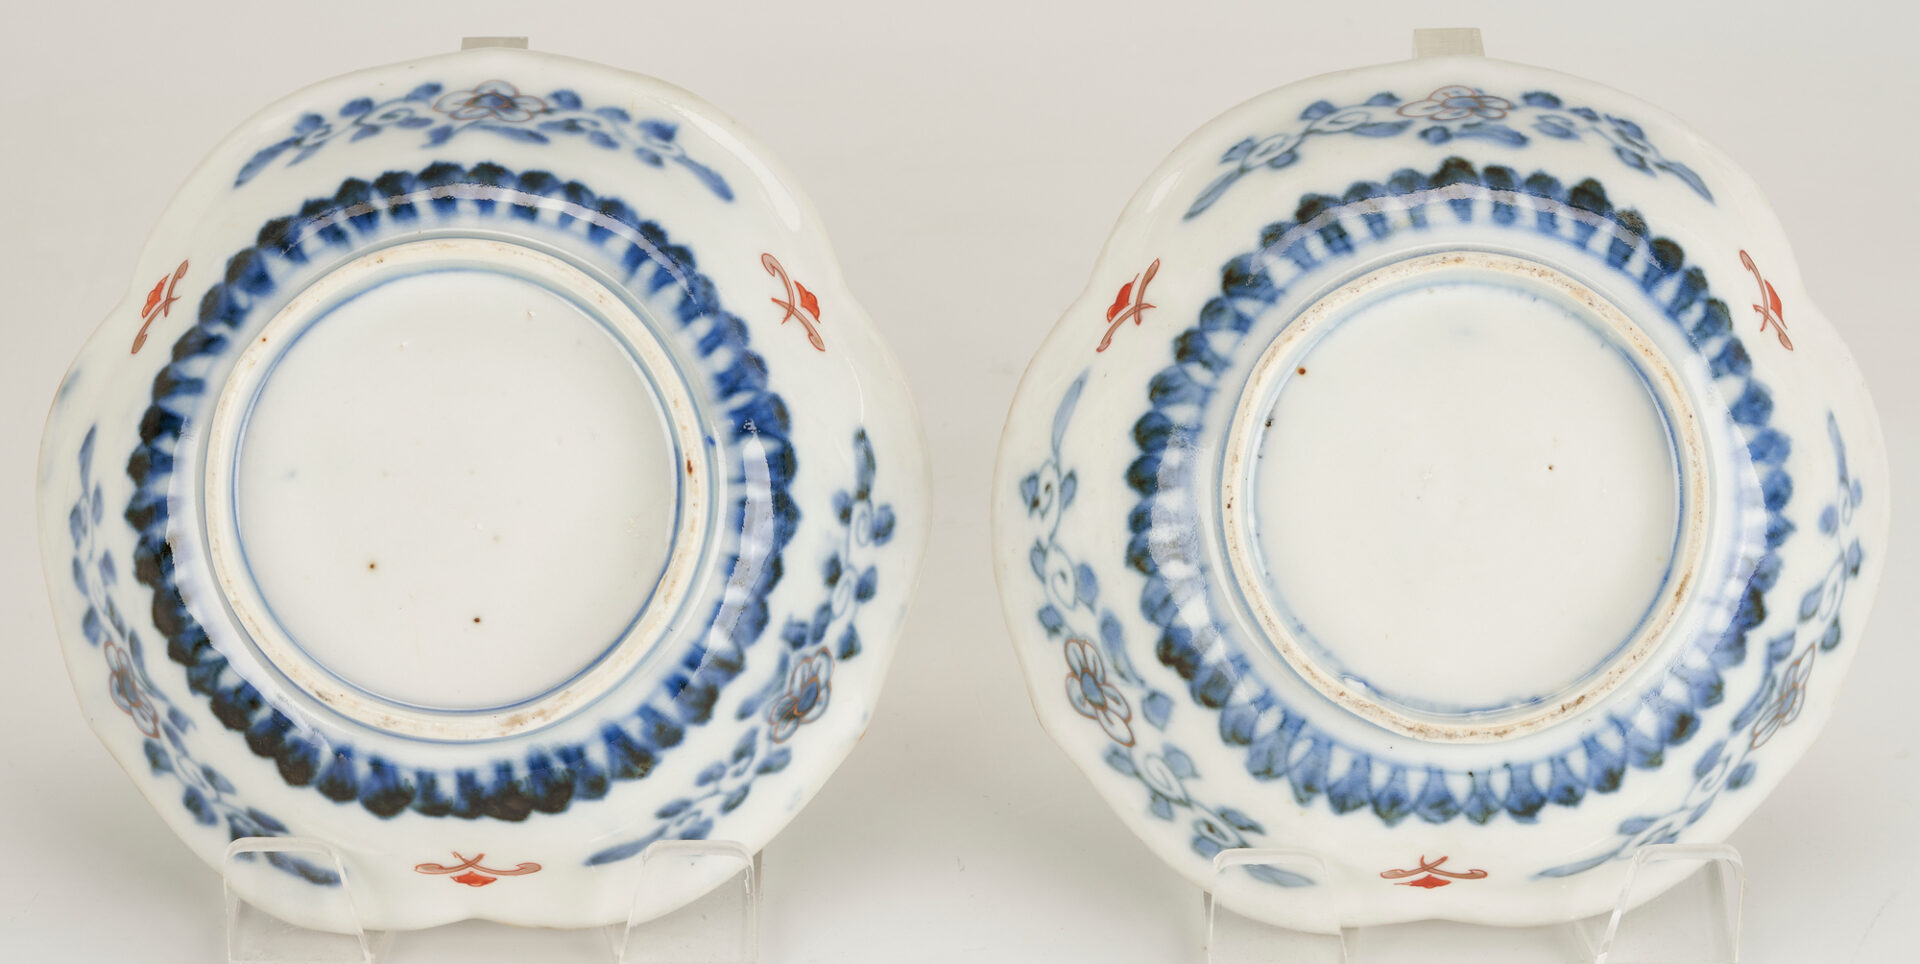 Lot 276: 4 Japanese Porcelain Bowls, incl. Satsuma